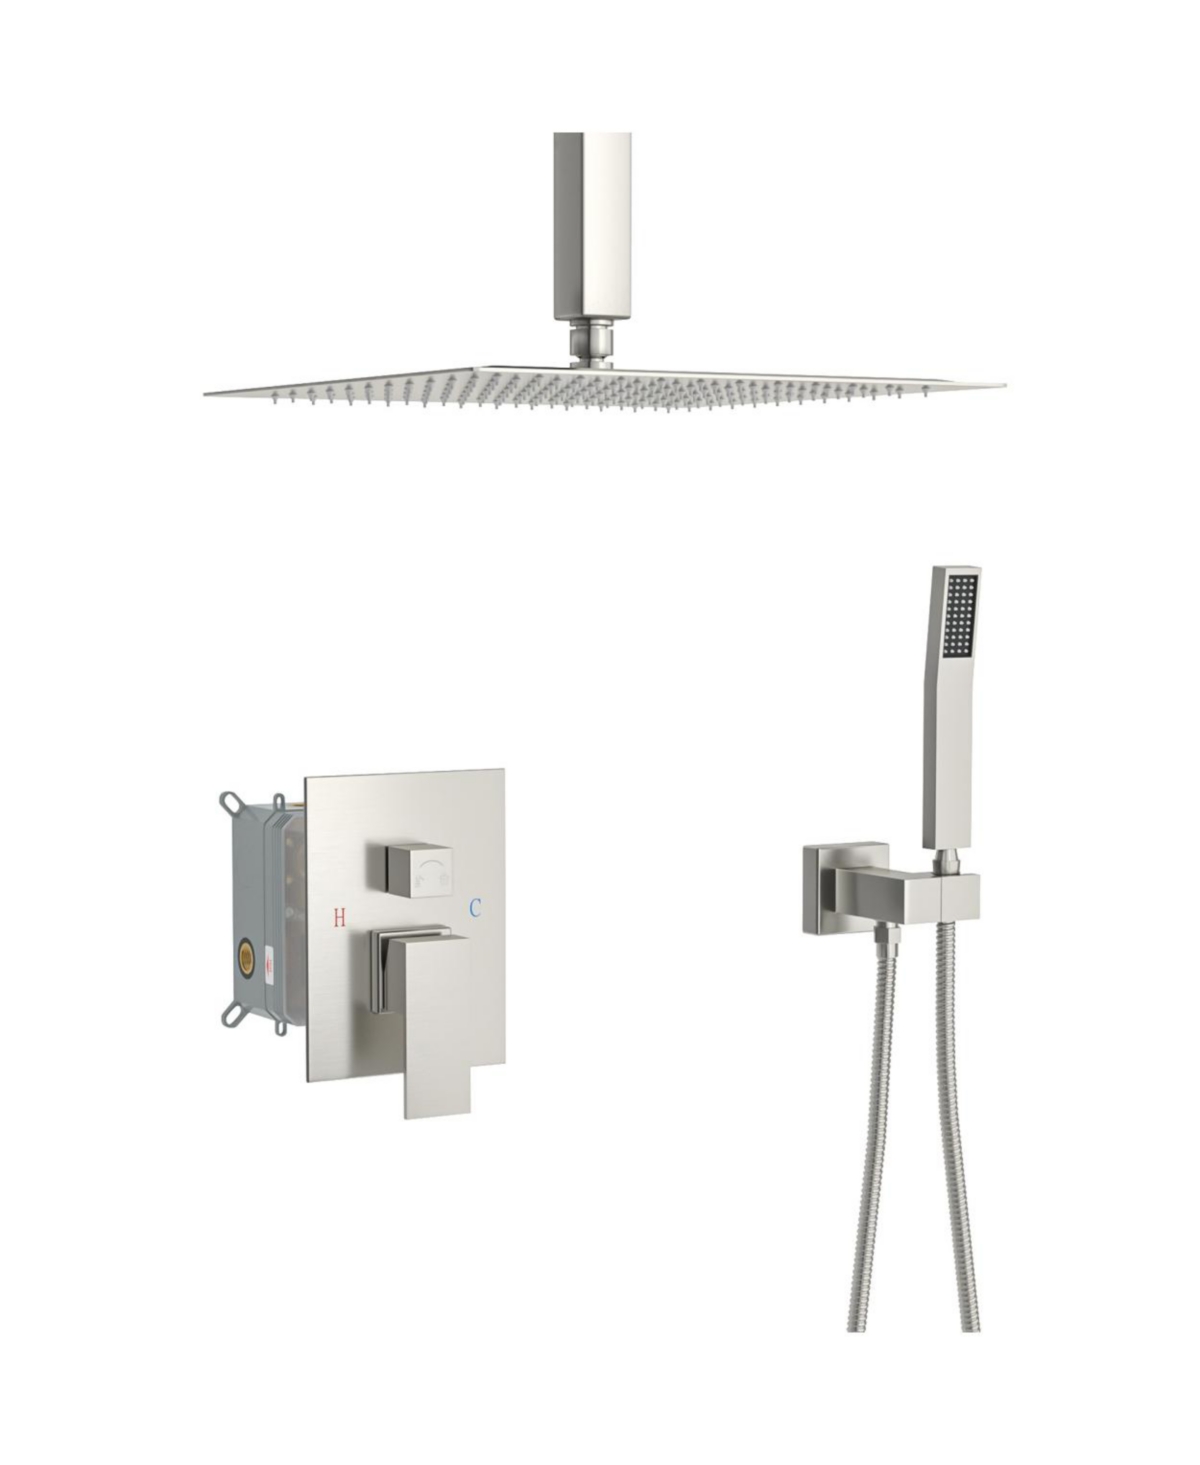 Ceiling Shower Set - 16 Inch Square Shower Set, Dual Shower Heads, Brushed Nickel - Brushed nickel